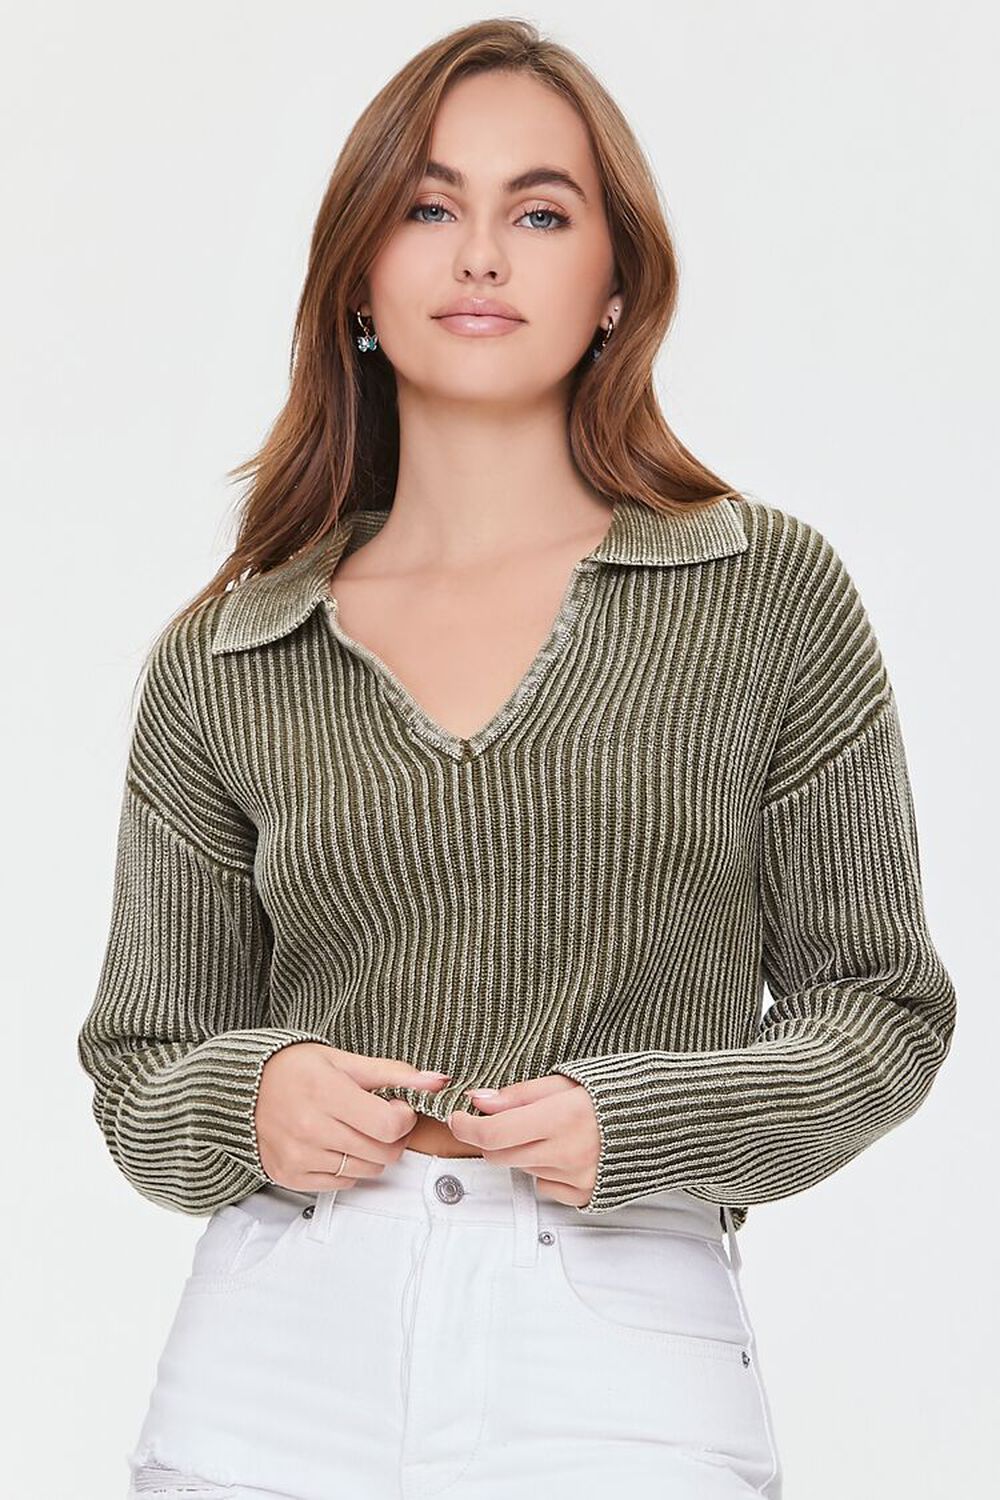 OLIVE Ribbed Split-Neck Sweater, image 1